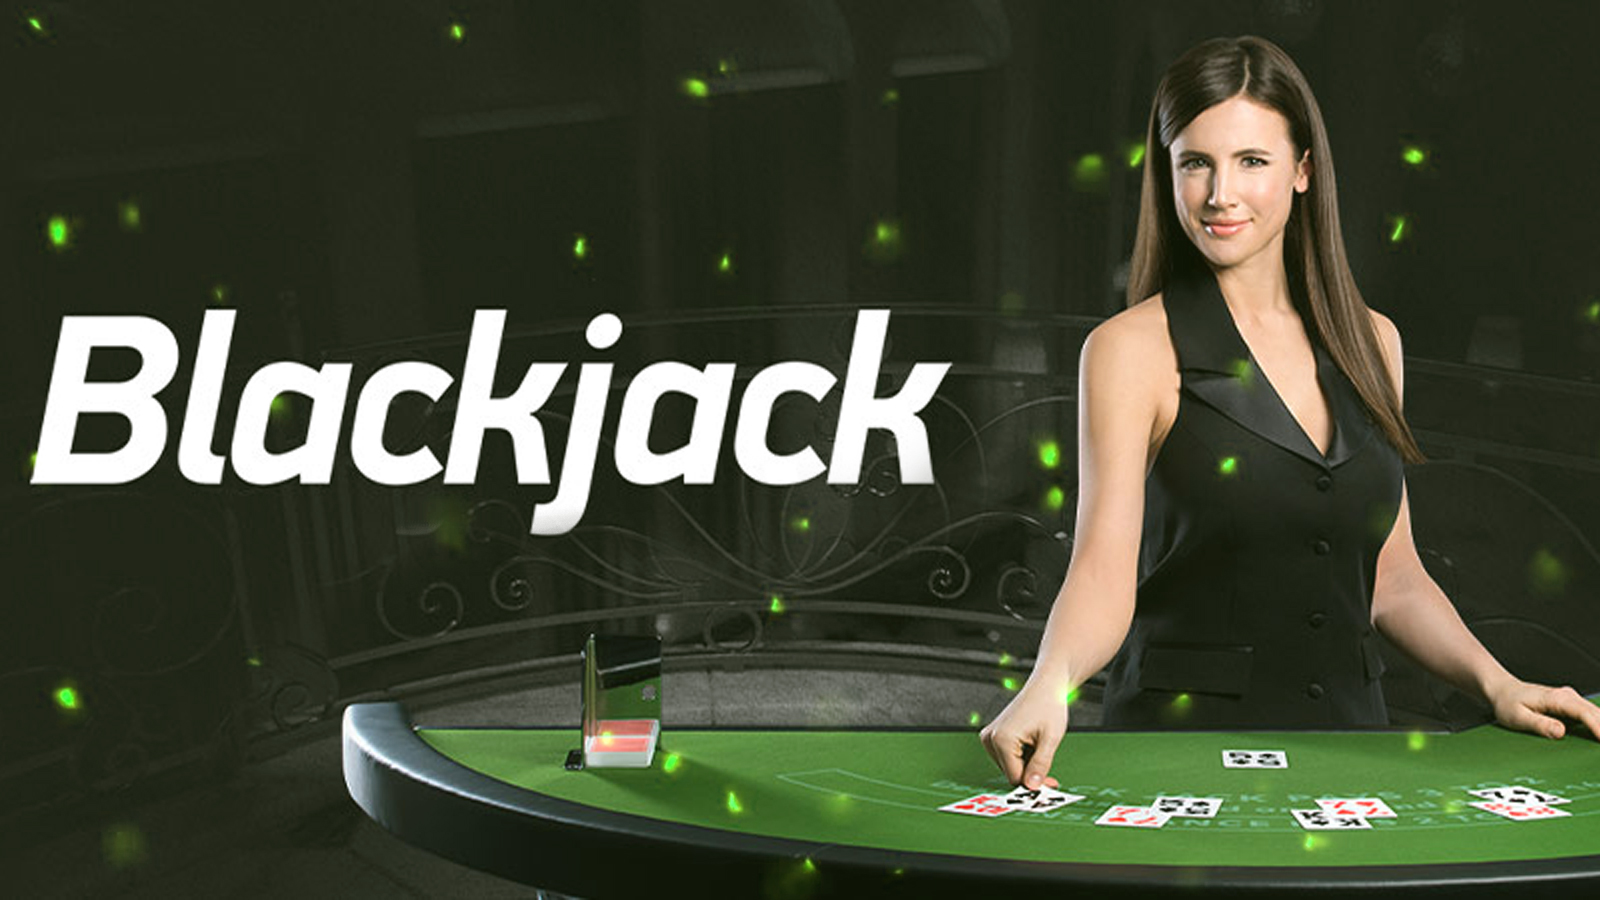 Play blackjack at Unibet casino.